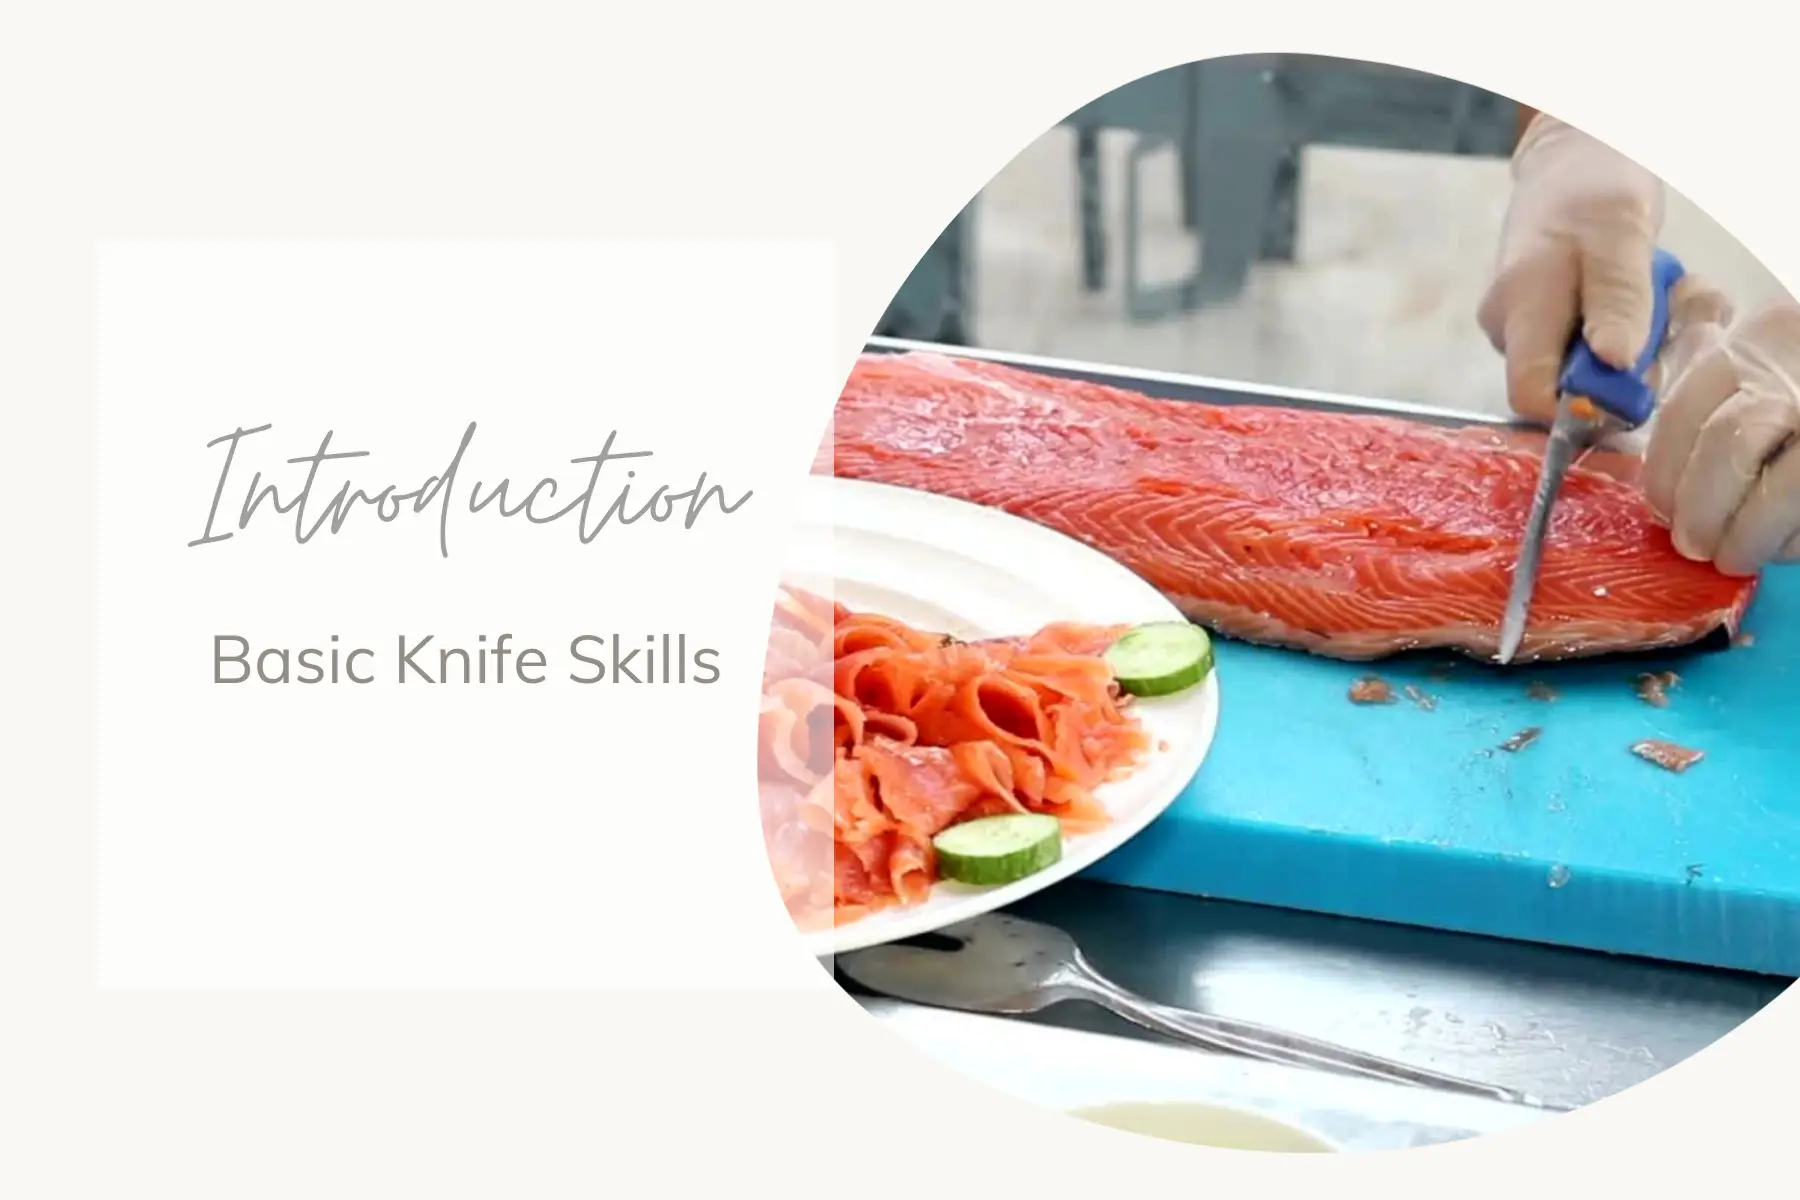 Introduction to Basic Knife Skills